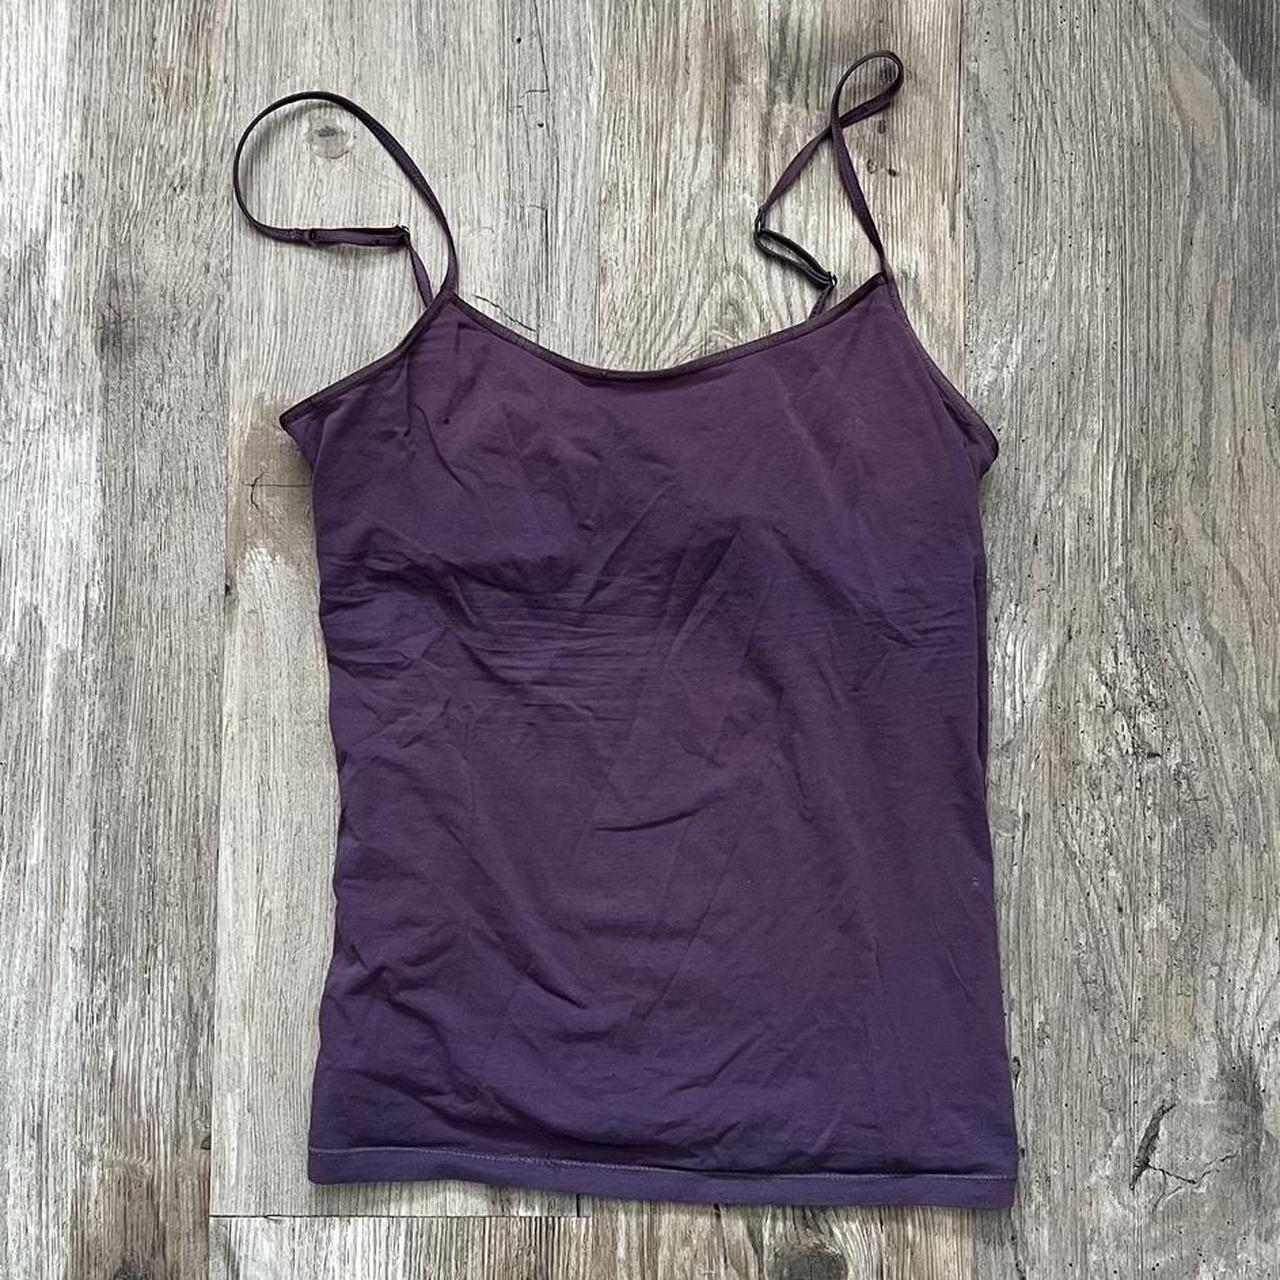 Women's Purple Camisole Tank Top Shirt with built in Bra Shelf